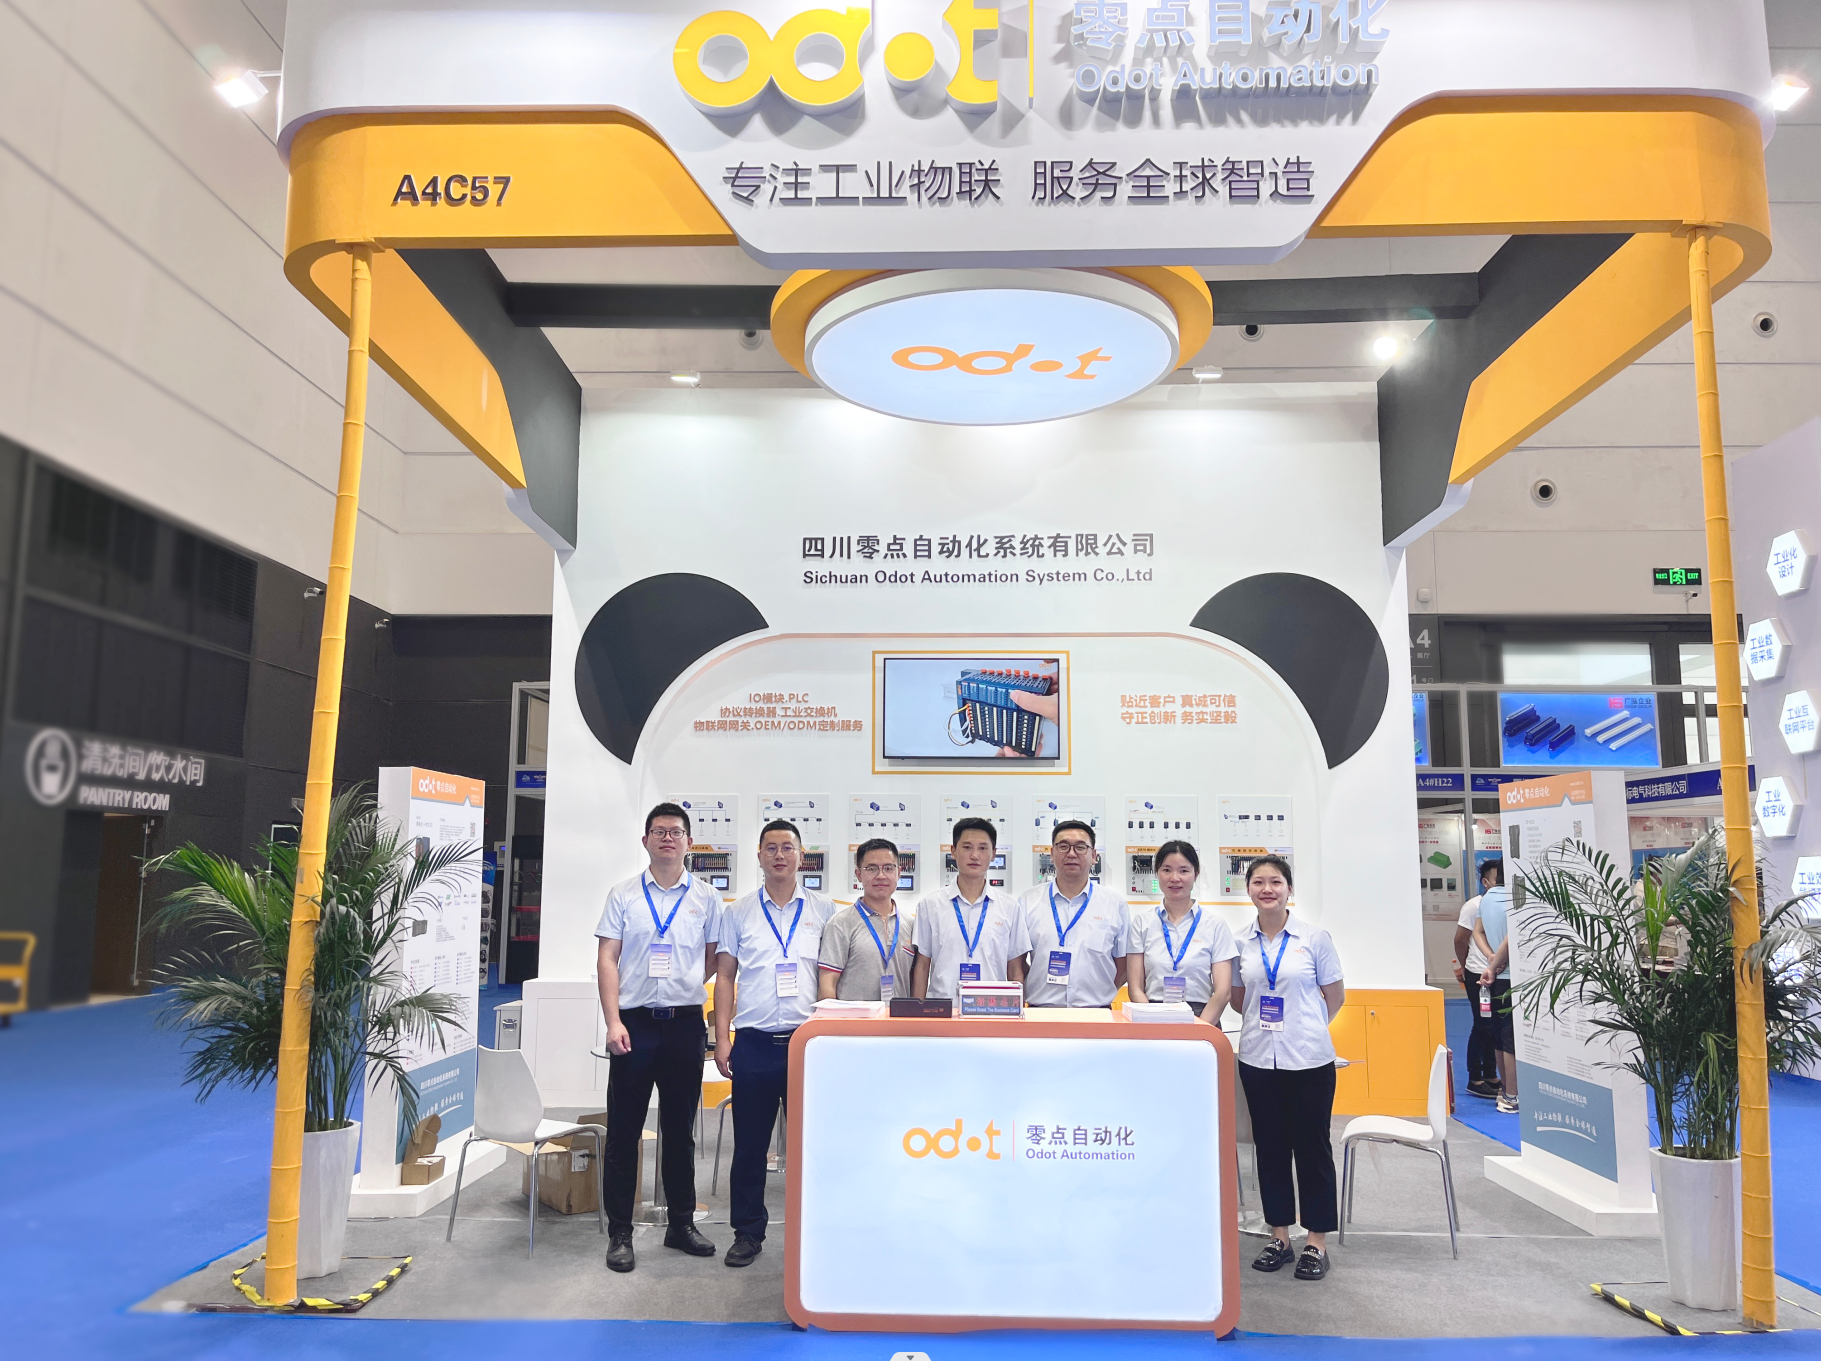 8.3 Qingdao CNC Expo